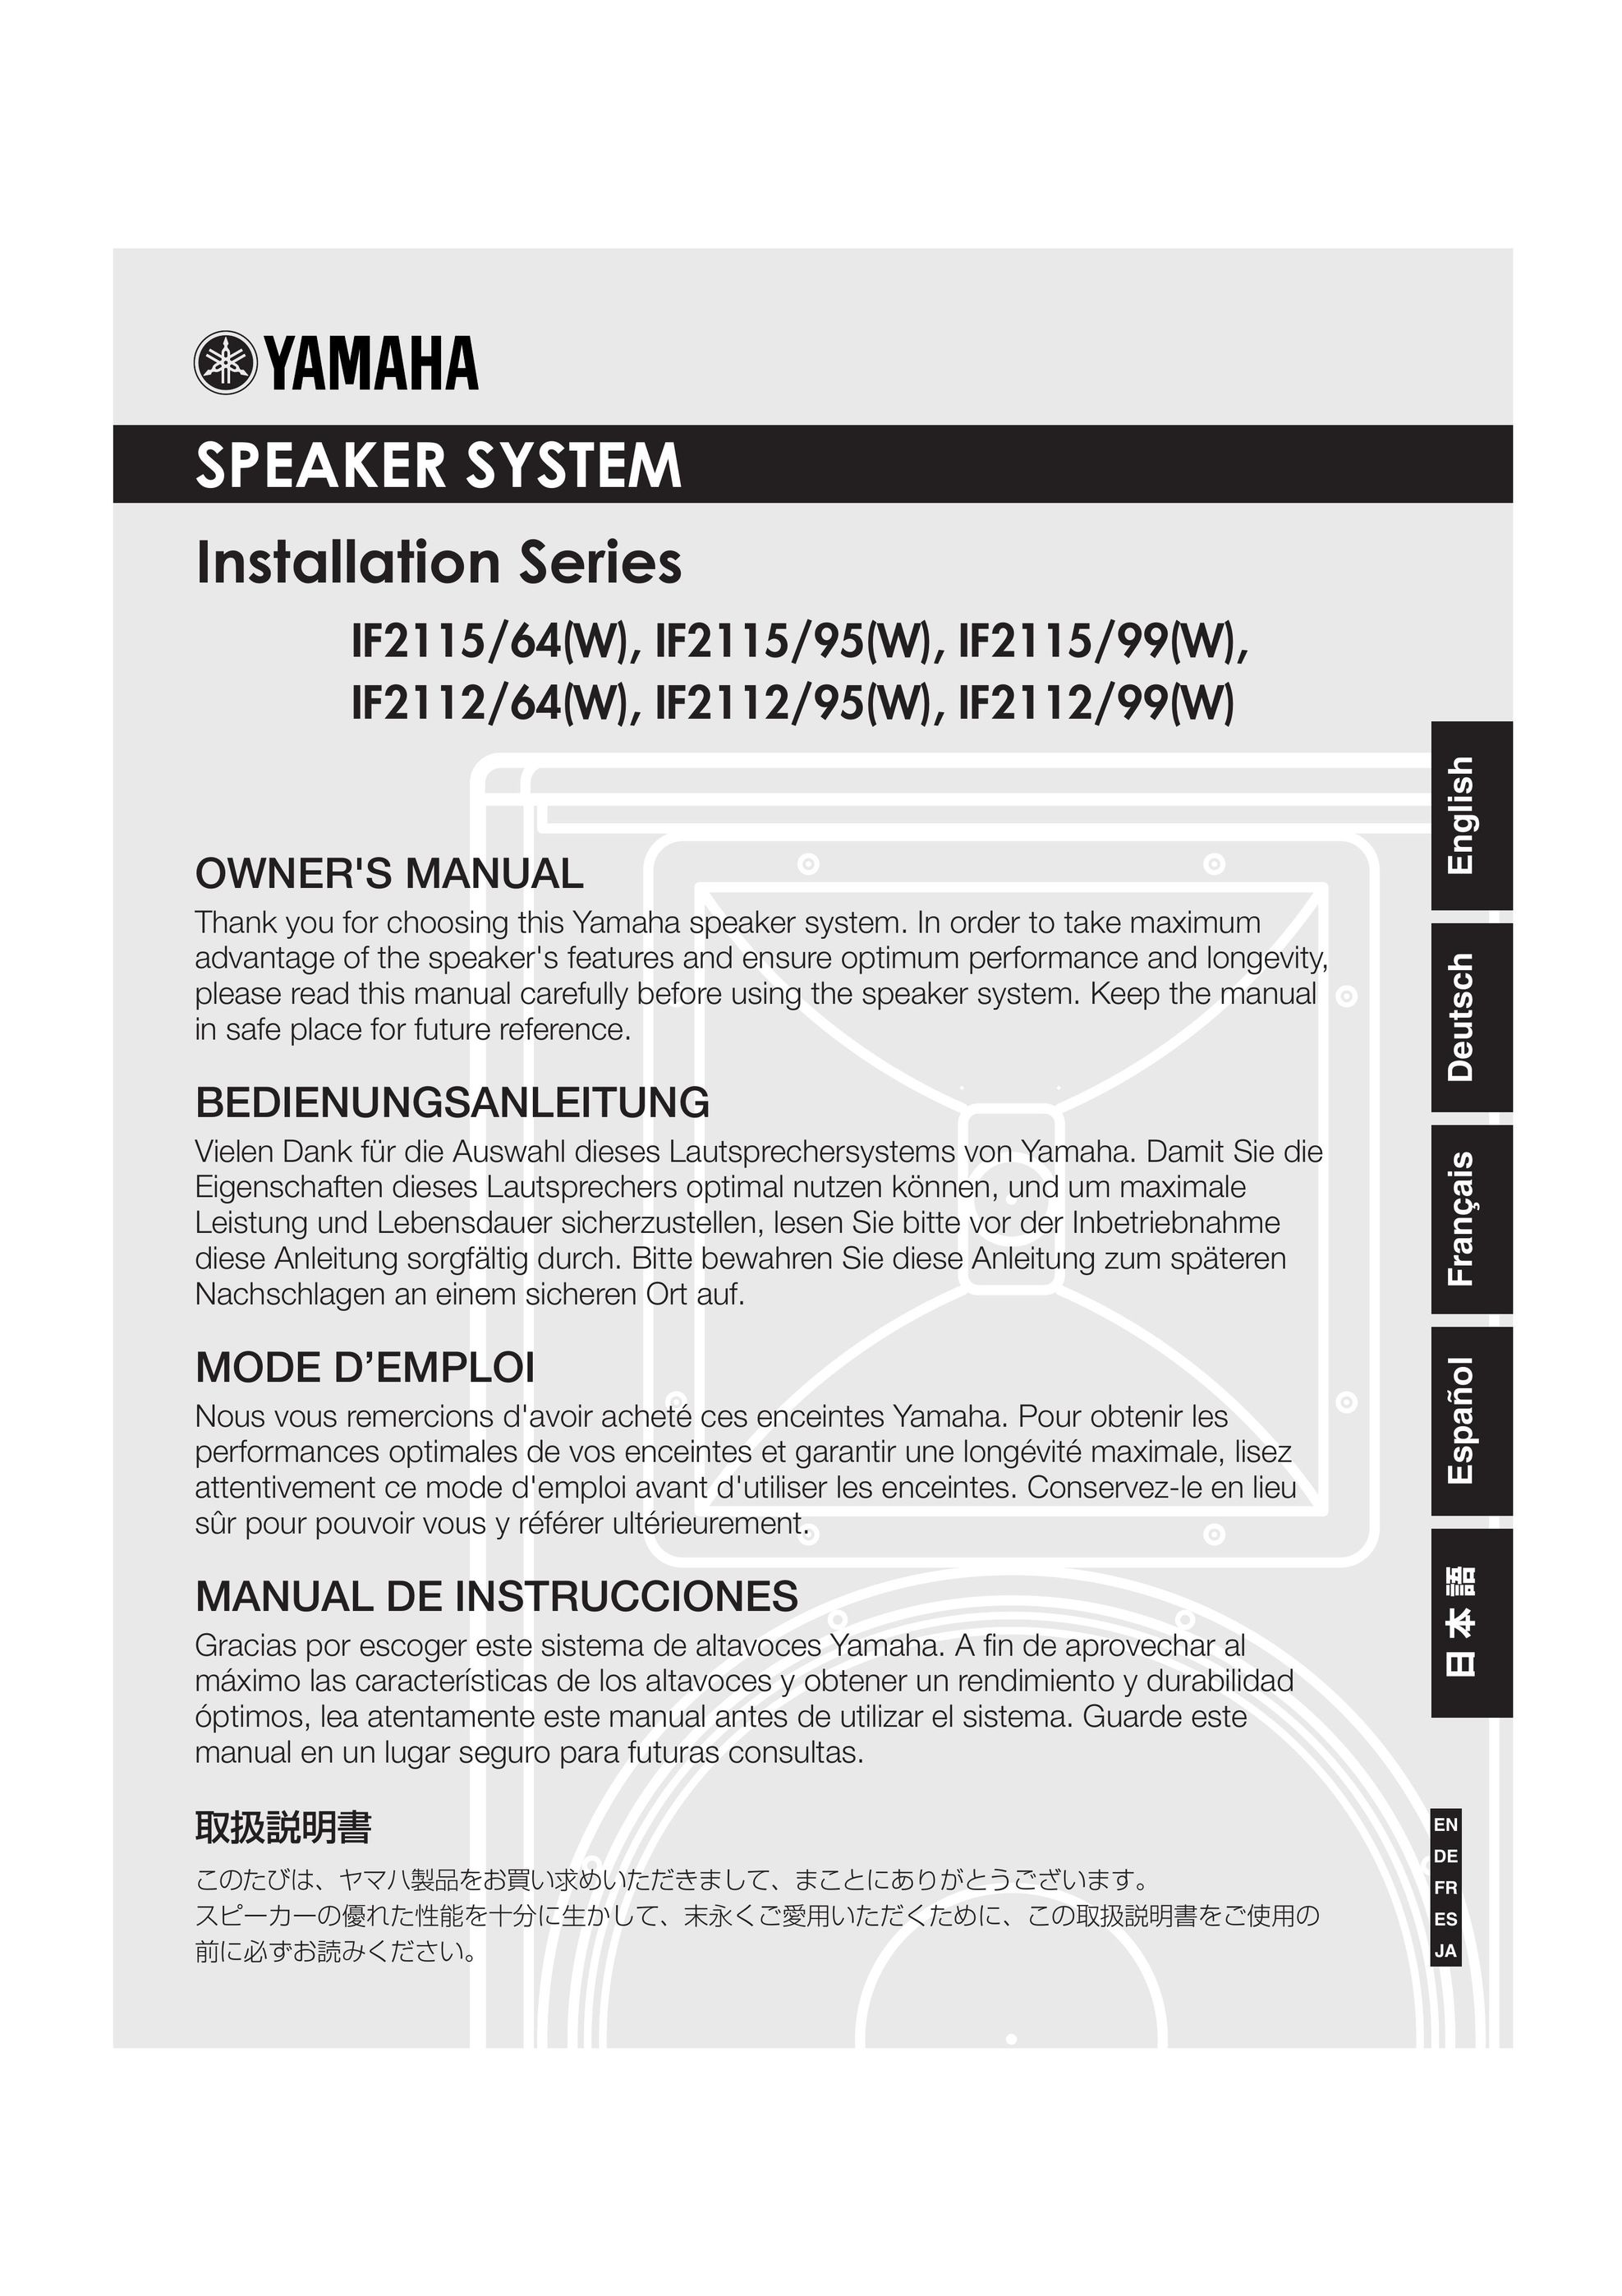 Yamaha IF2115/95(W) Portable Speaker User Manual